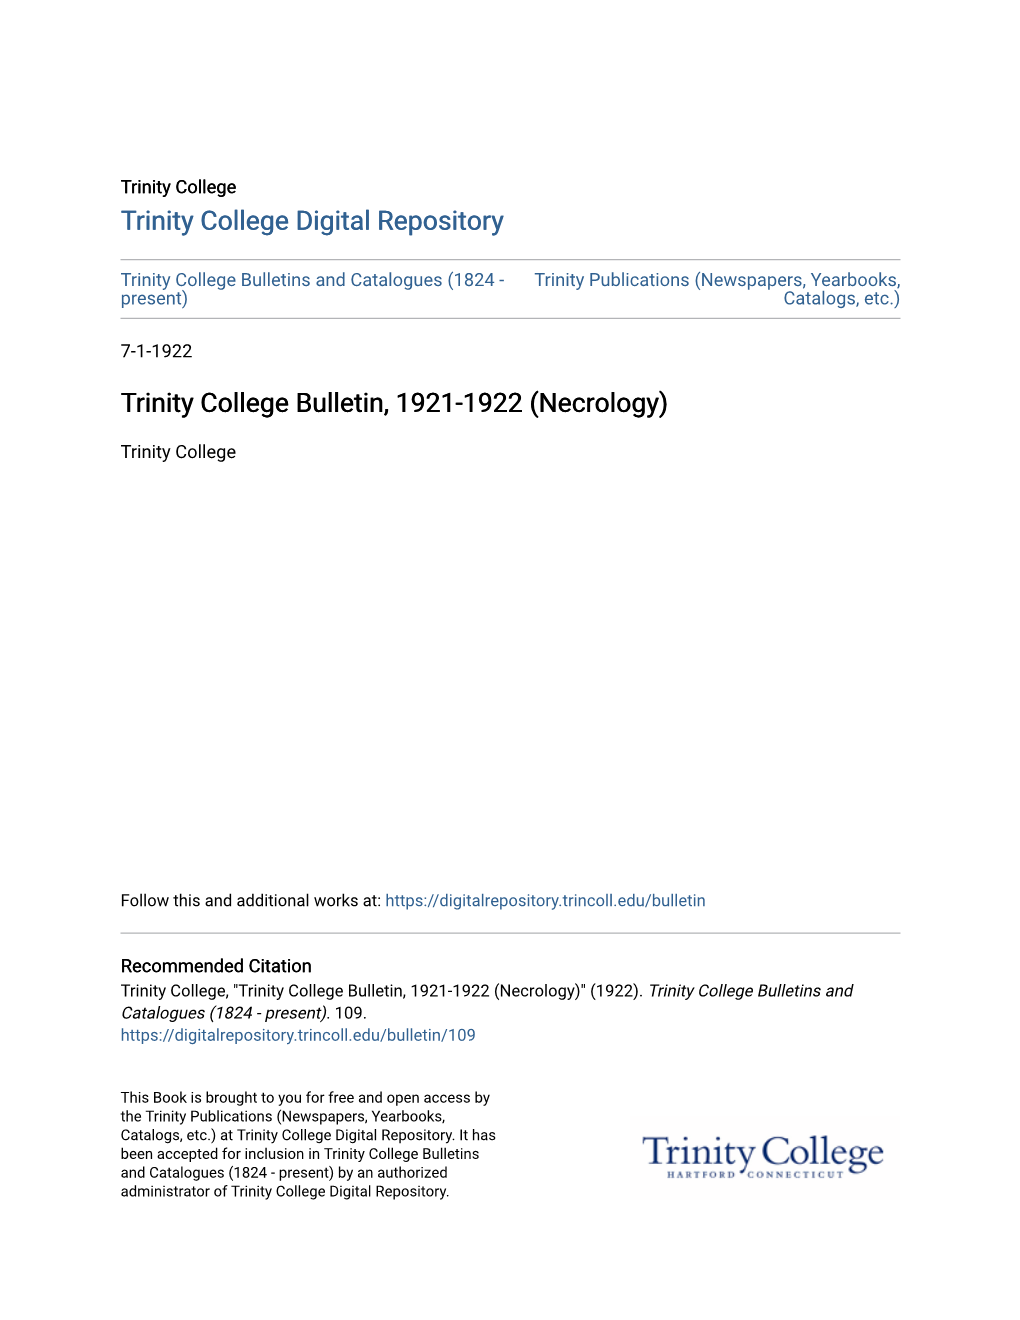 Trinity College Bulletin, 1921-1922 (Necrology)